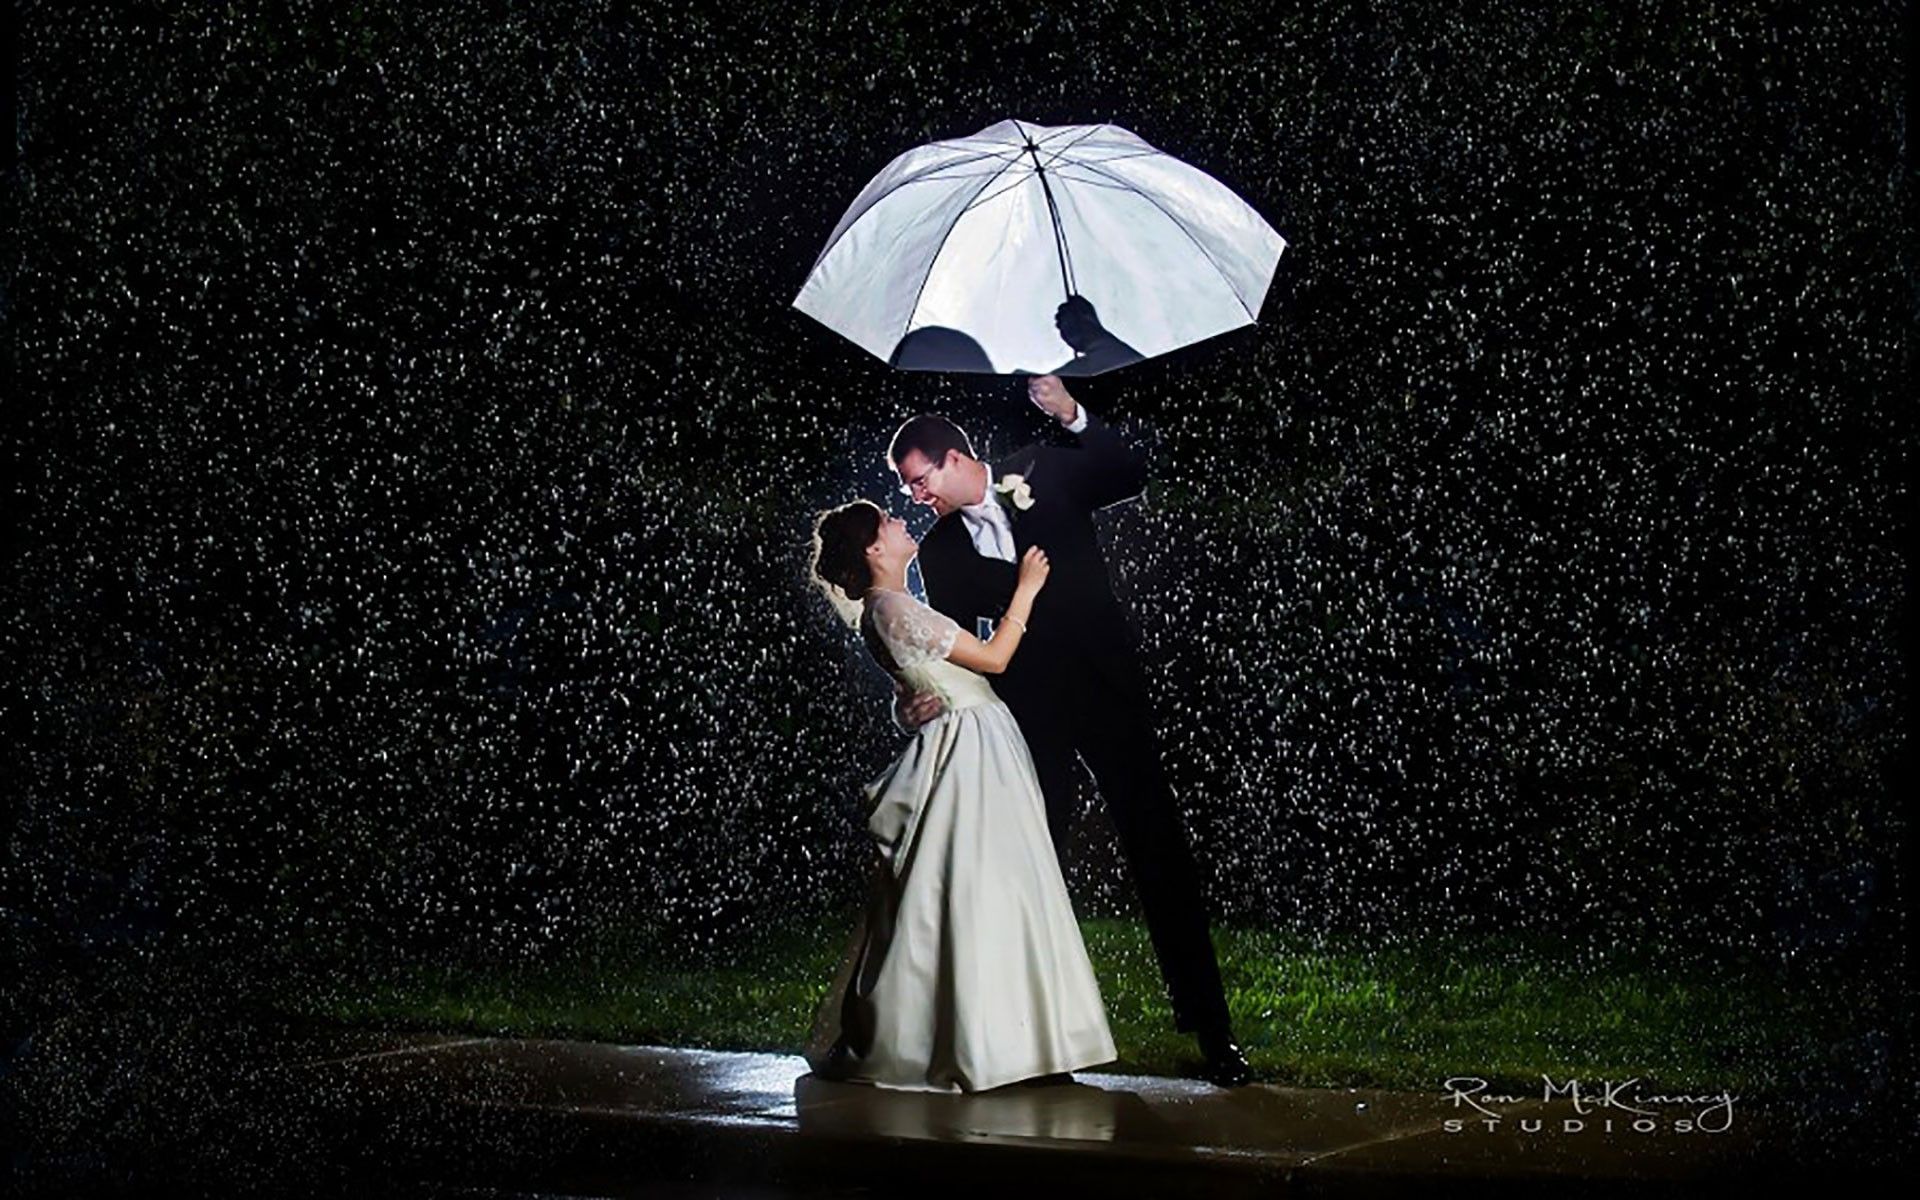 Cute Love Couple HD Wallpaper In A Rainy Night